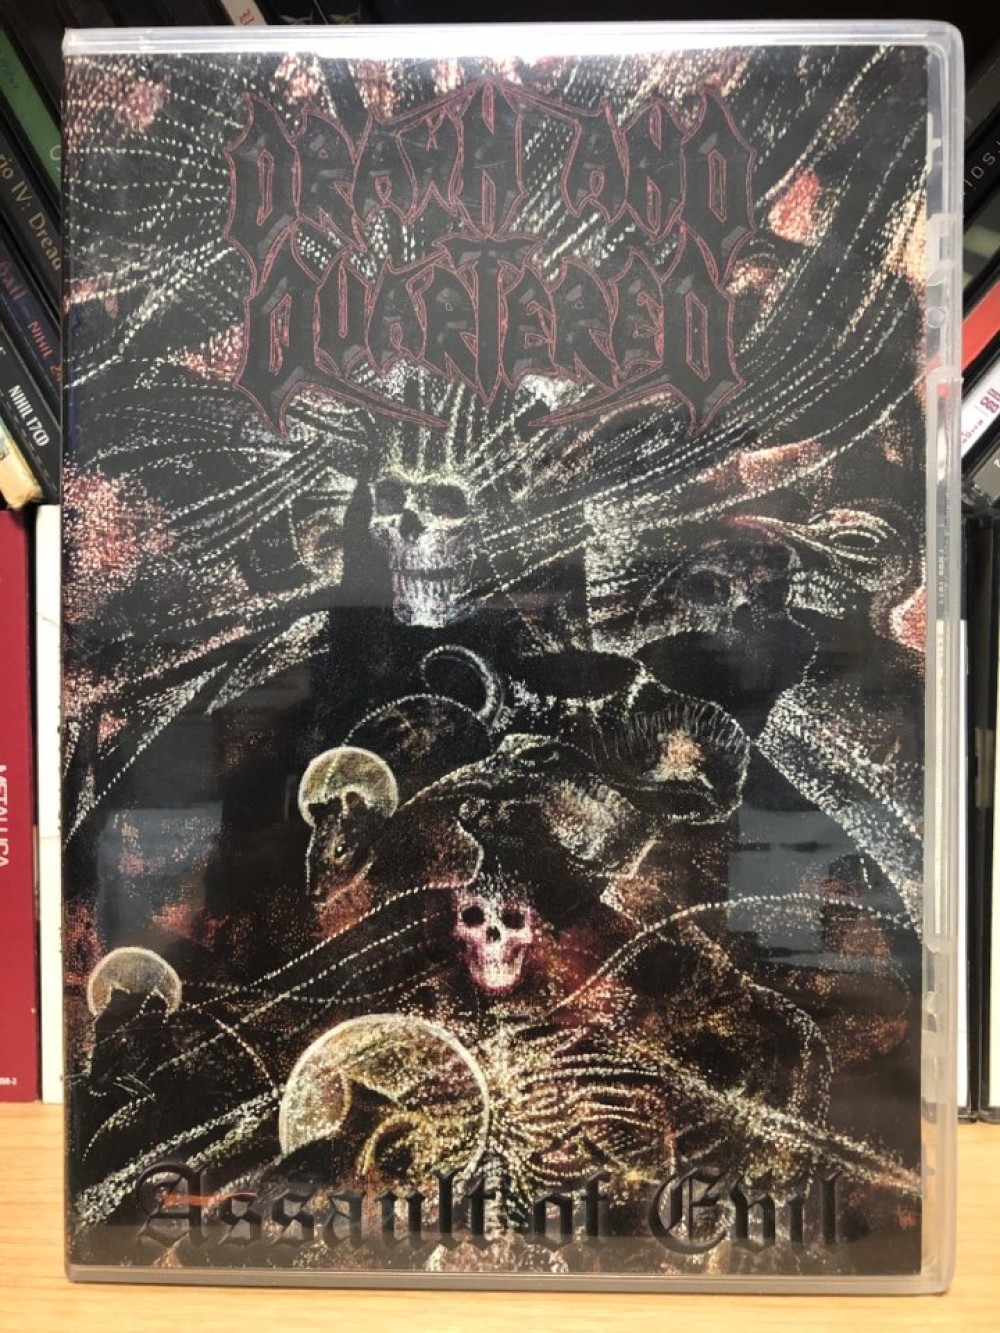 Drawn and Quartered - Assault of Evil DVD Photo - Metal Kingdom